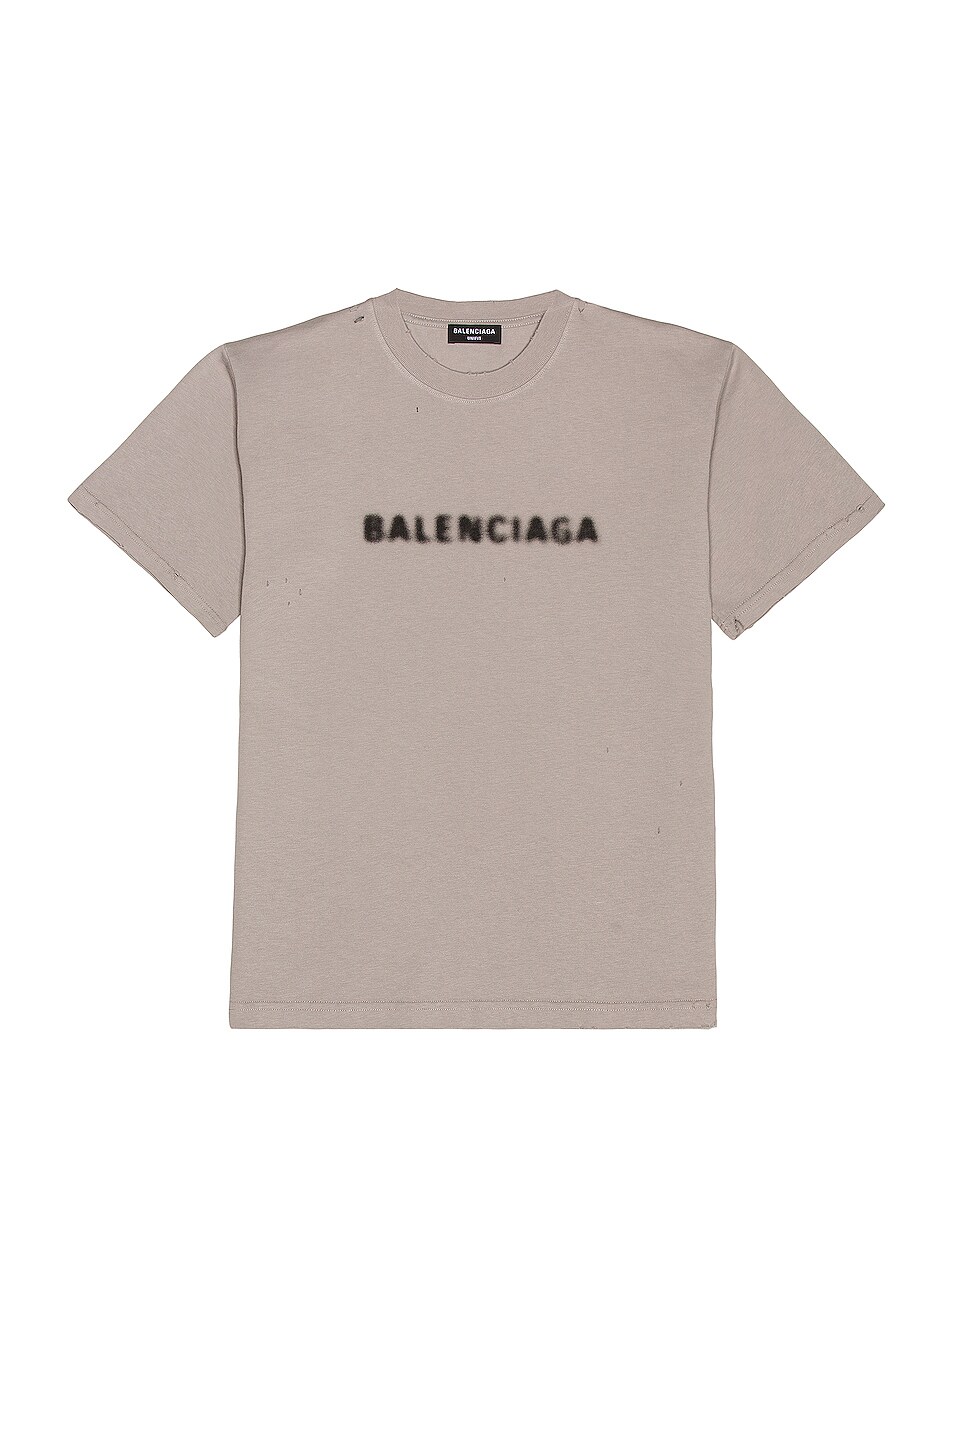 Image 1 of Balenciaga Small Fit Tee in Grey & Black